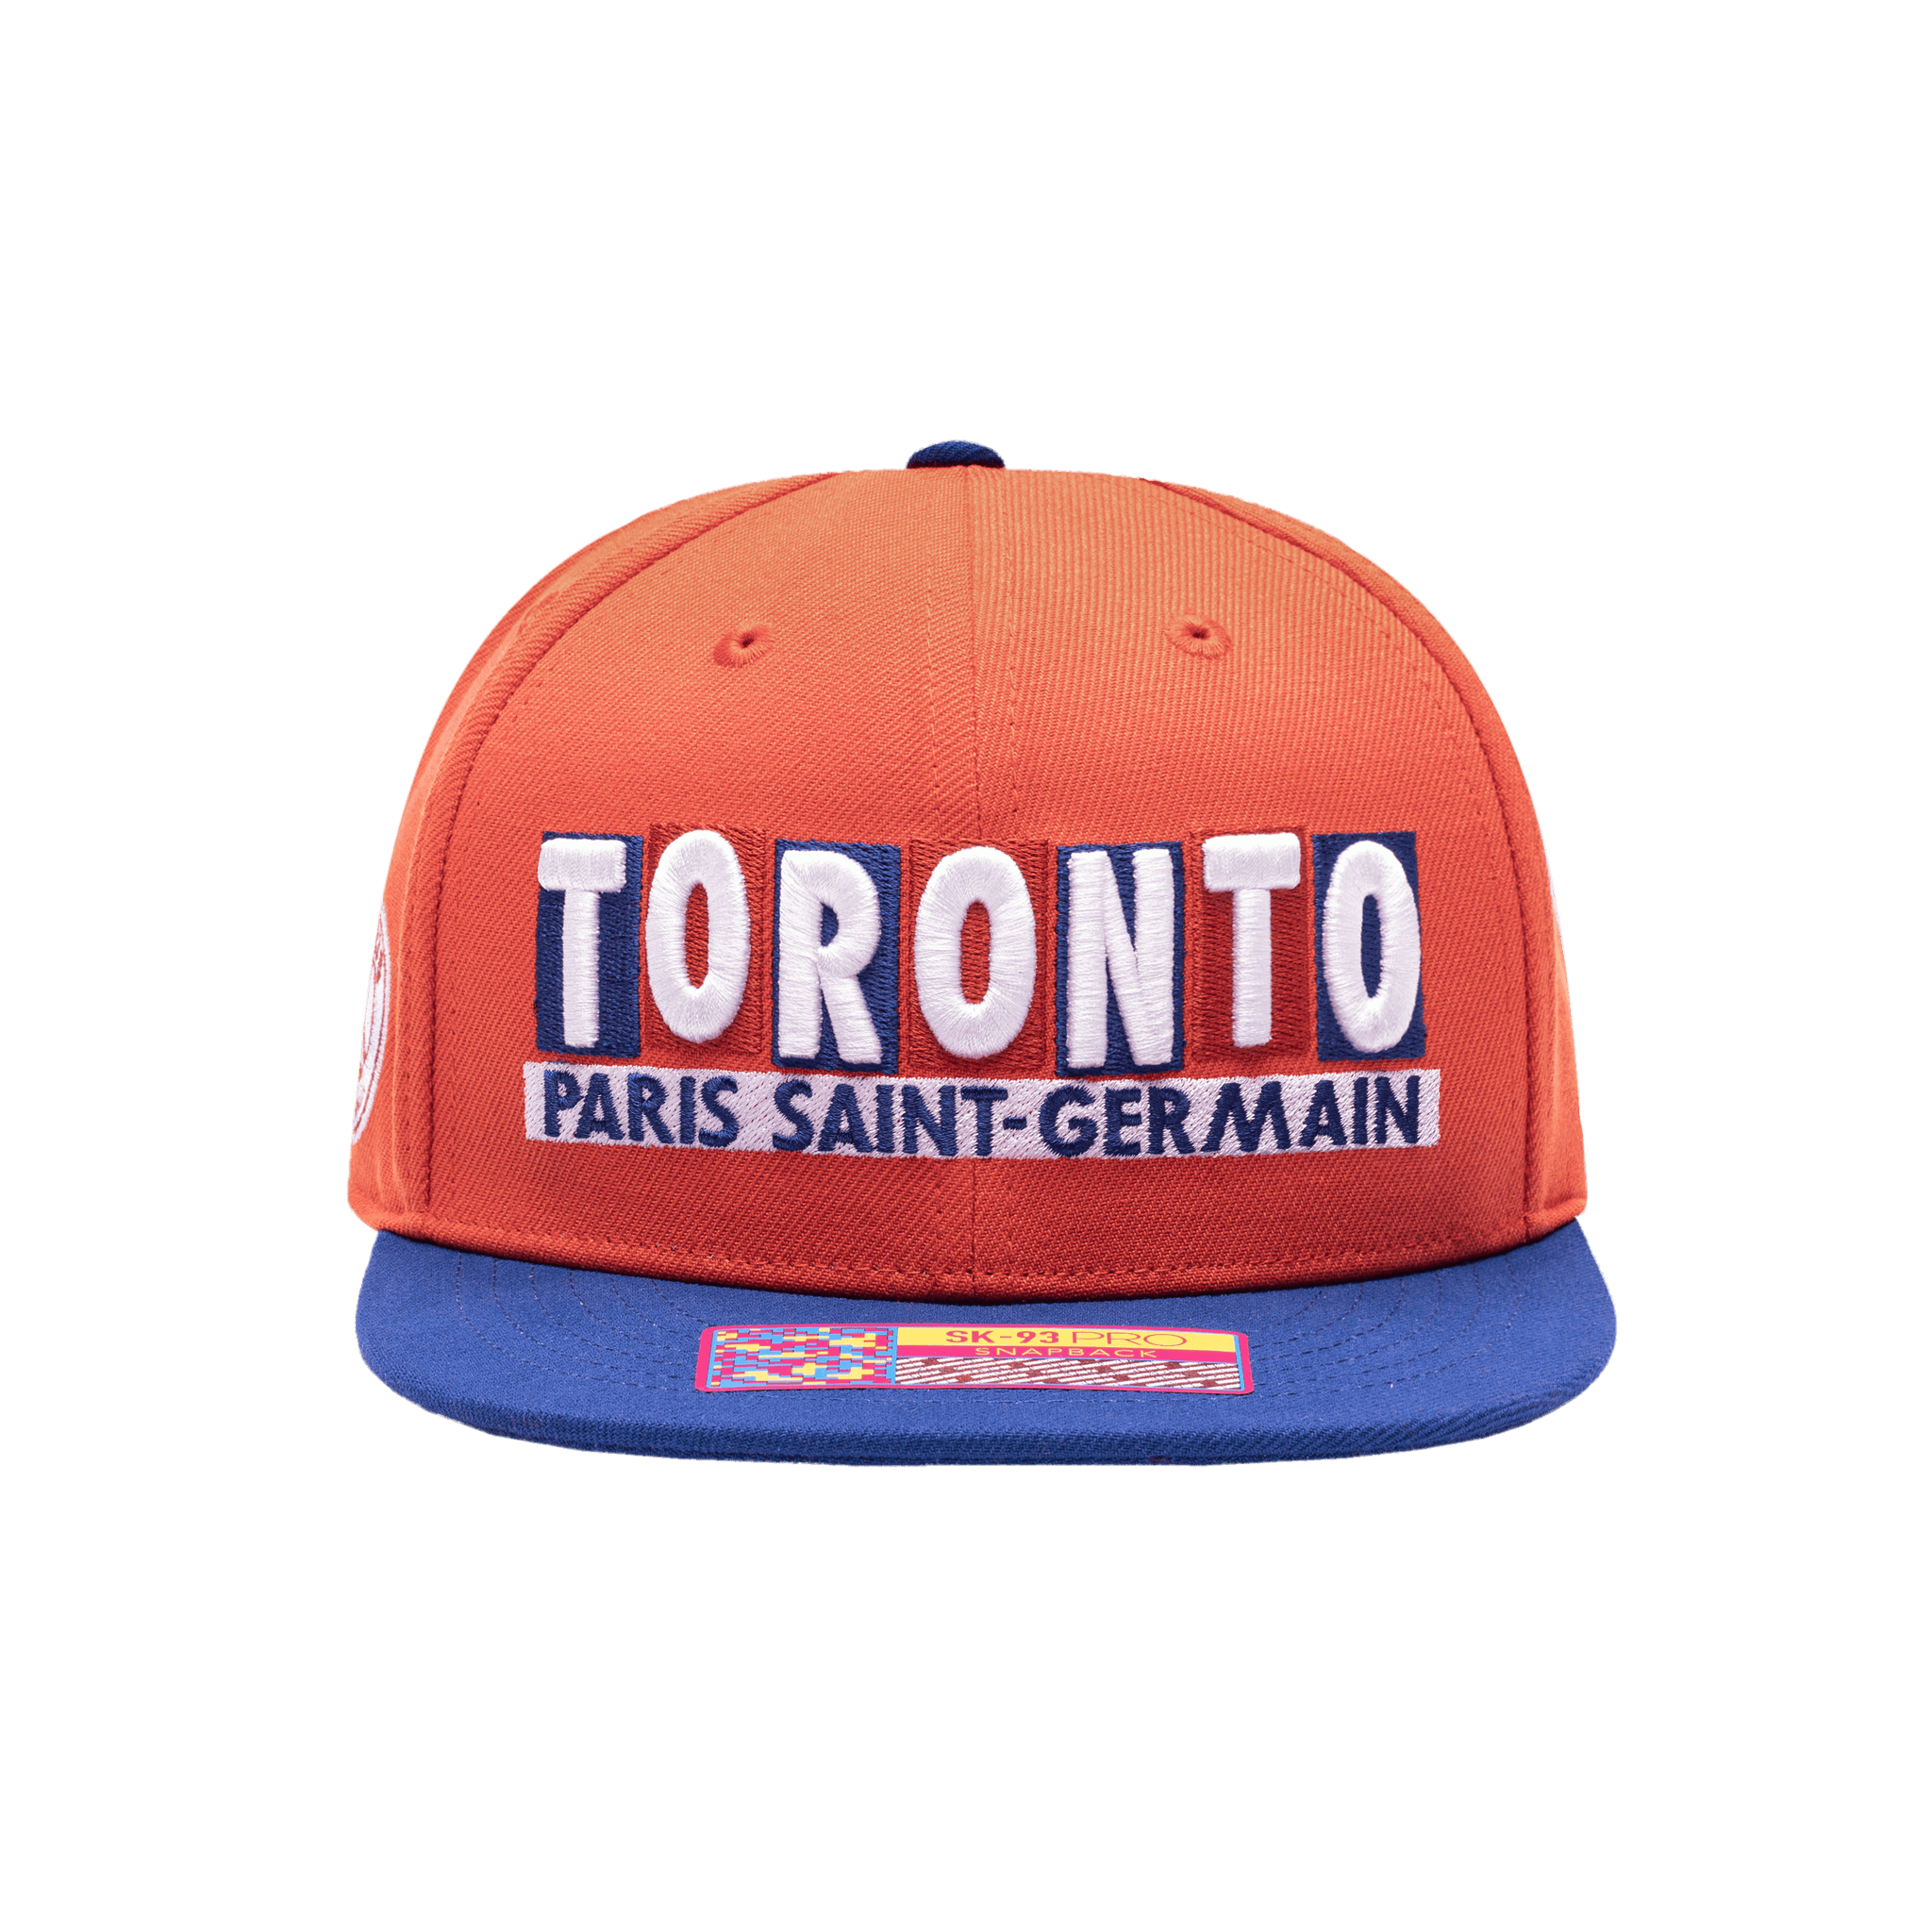 Paris Saint-Germain Toronto Snapback Hat